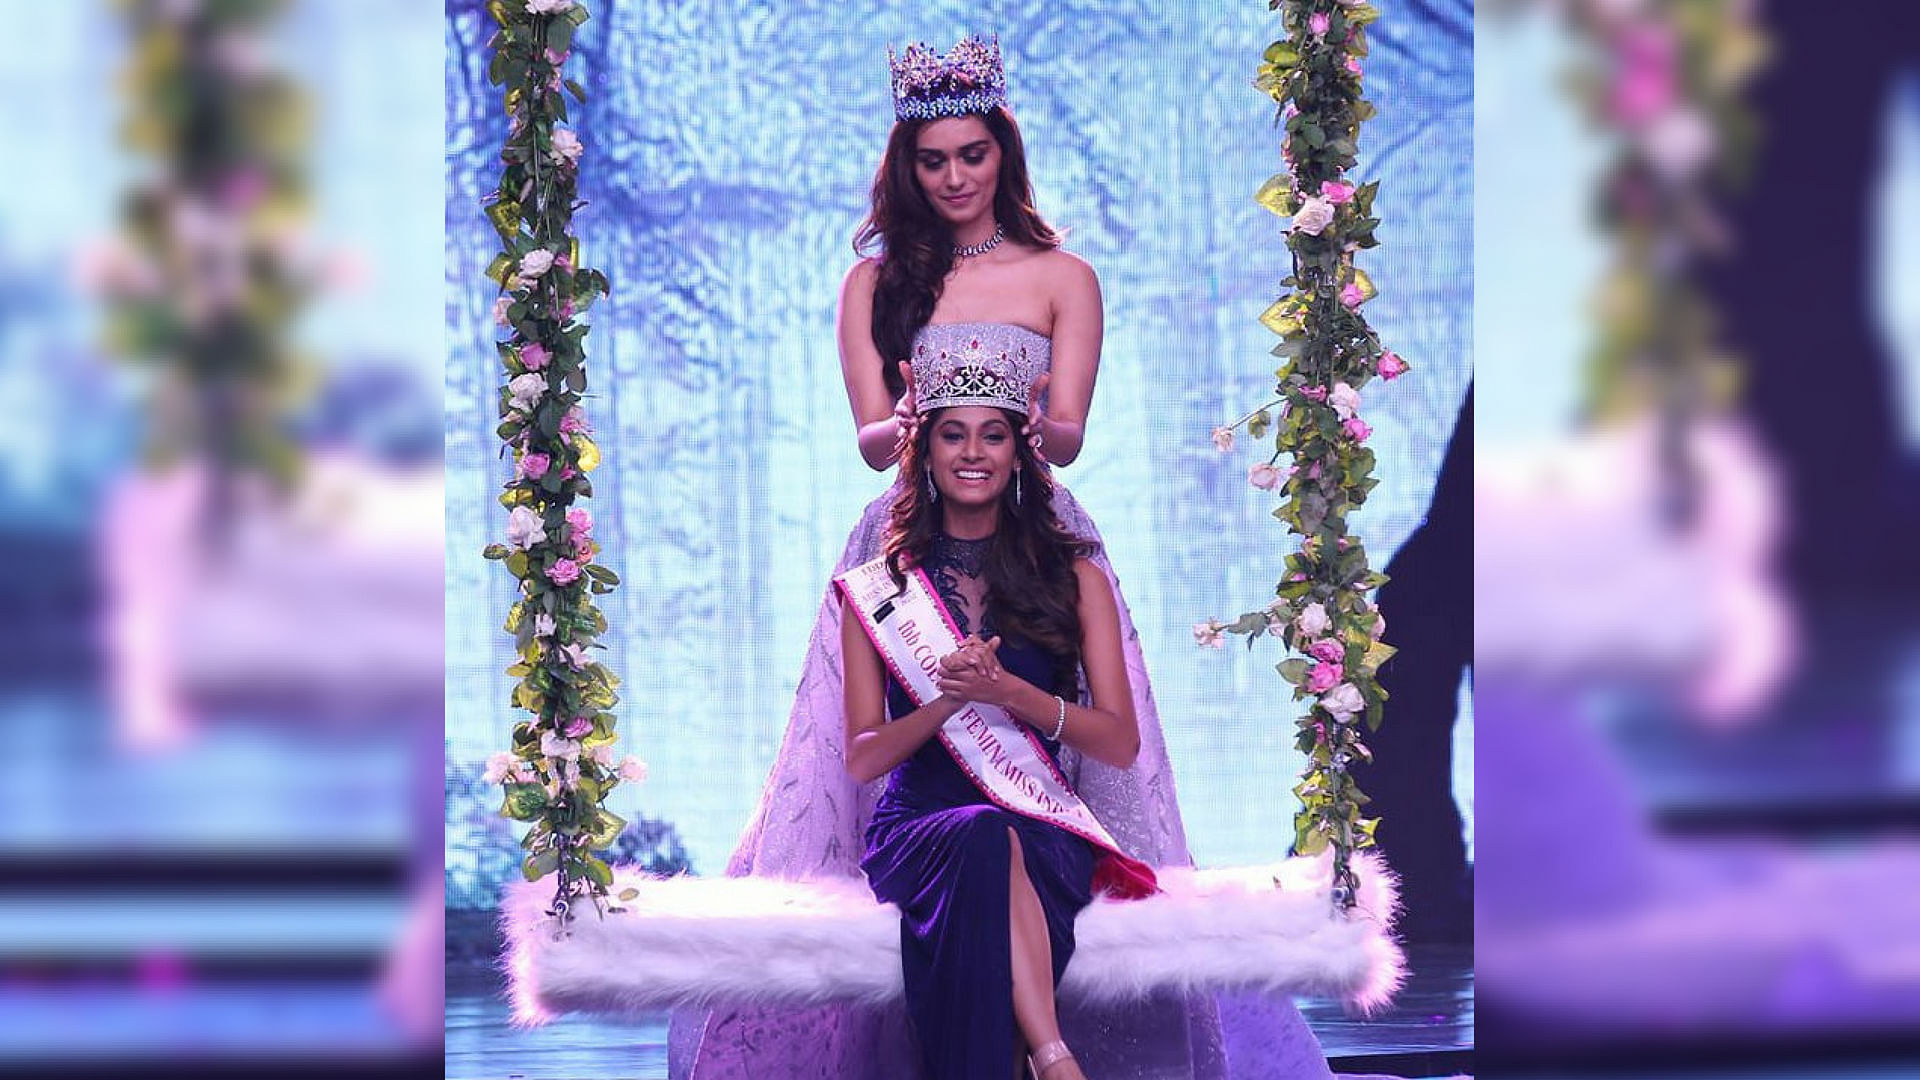 19-year-old Anukreethy Vas was crowned Femina Miss India 2018 on 19 June.